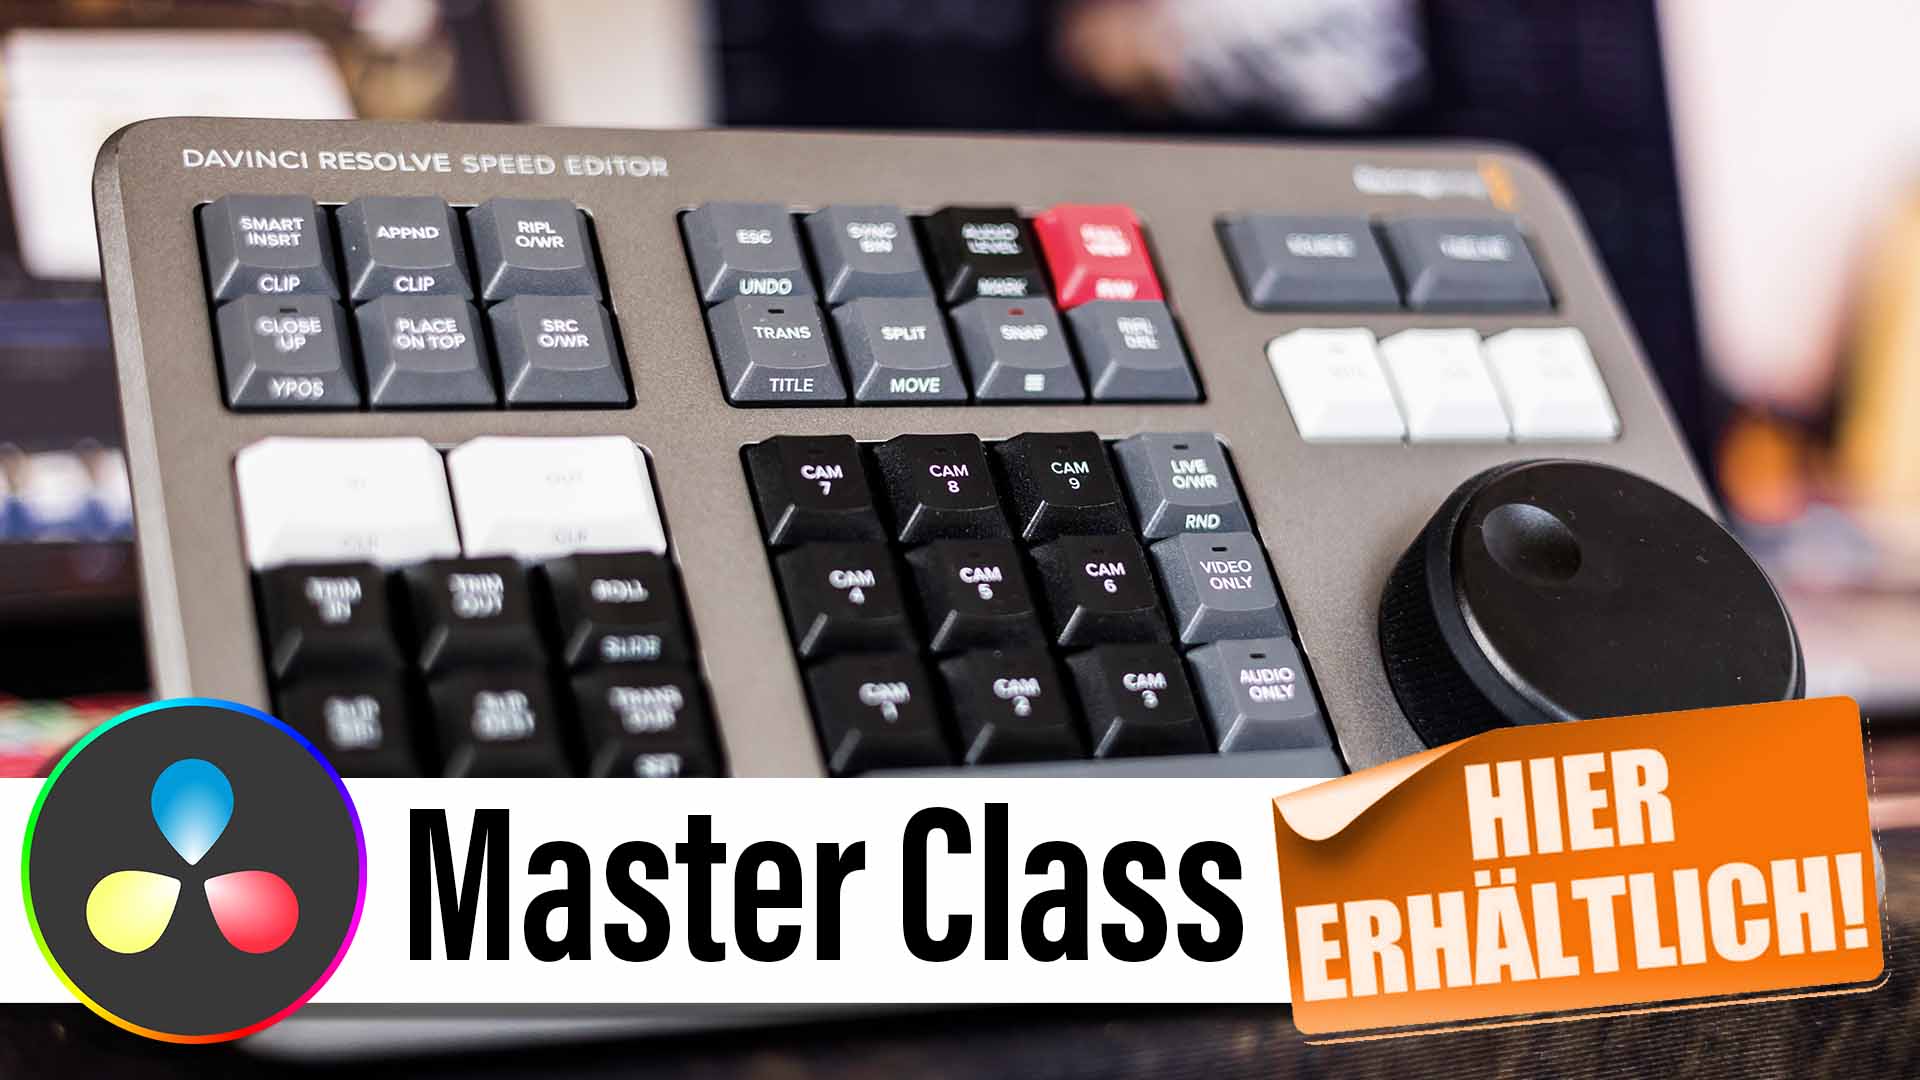 DaVinci Resolve Speed Editor MasterClass: Erhalte 100 EUR Rabatt!